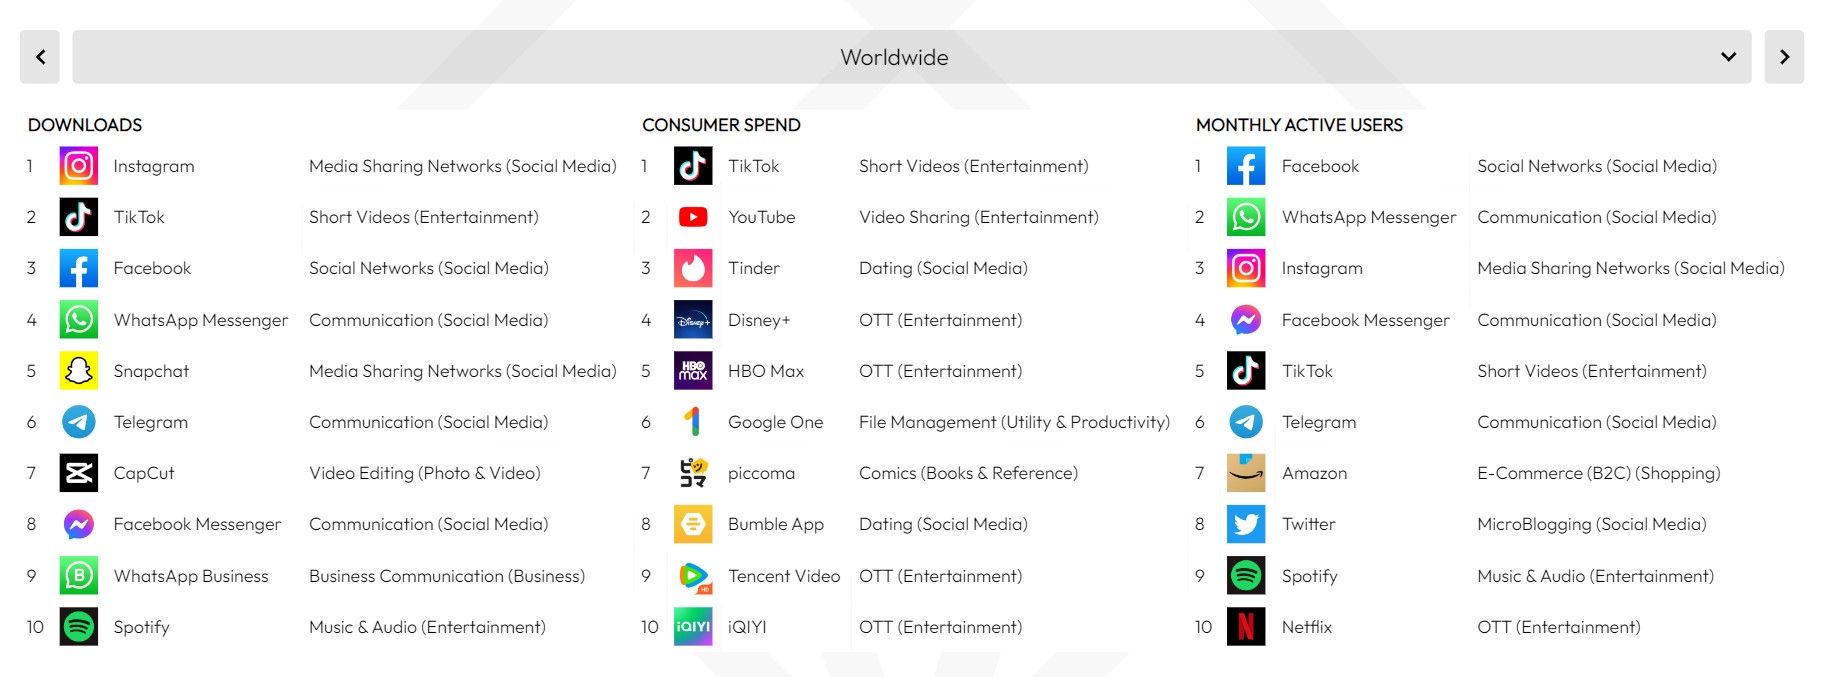 mobile apps-world ranking-2022